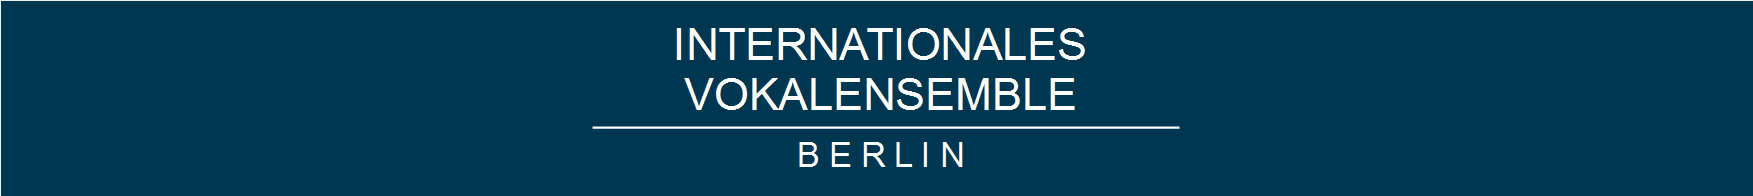 Internationales Vokalensemble Berlin